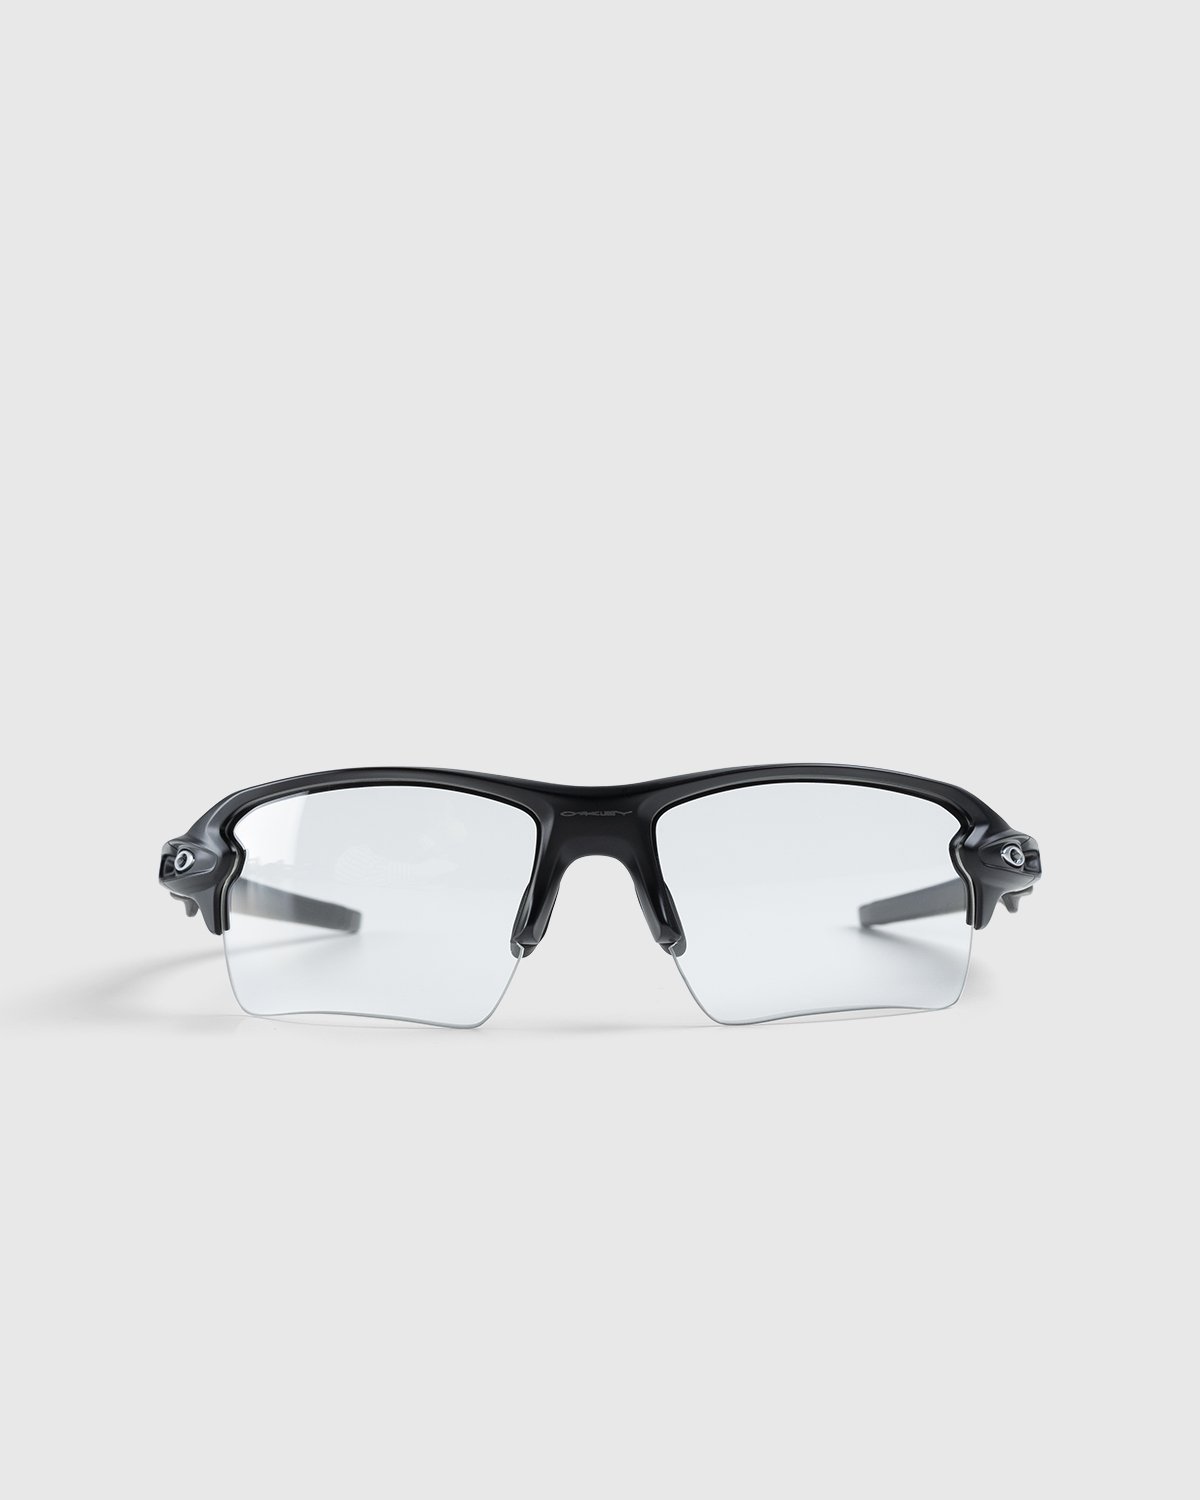 Oakley - Flak 2.0 XL Clear Photochromic Lenses Matte Black Frame - Accessories - Black - Image 1